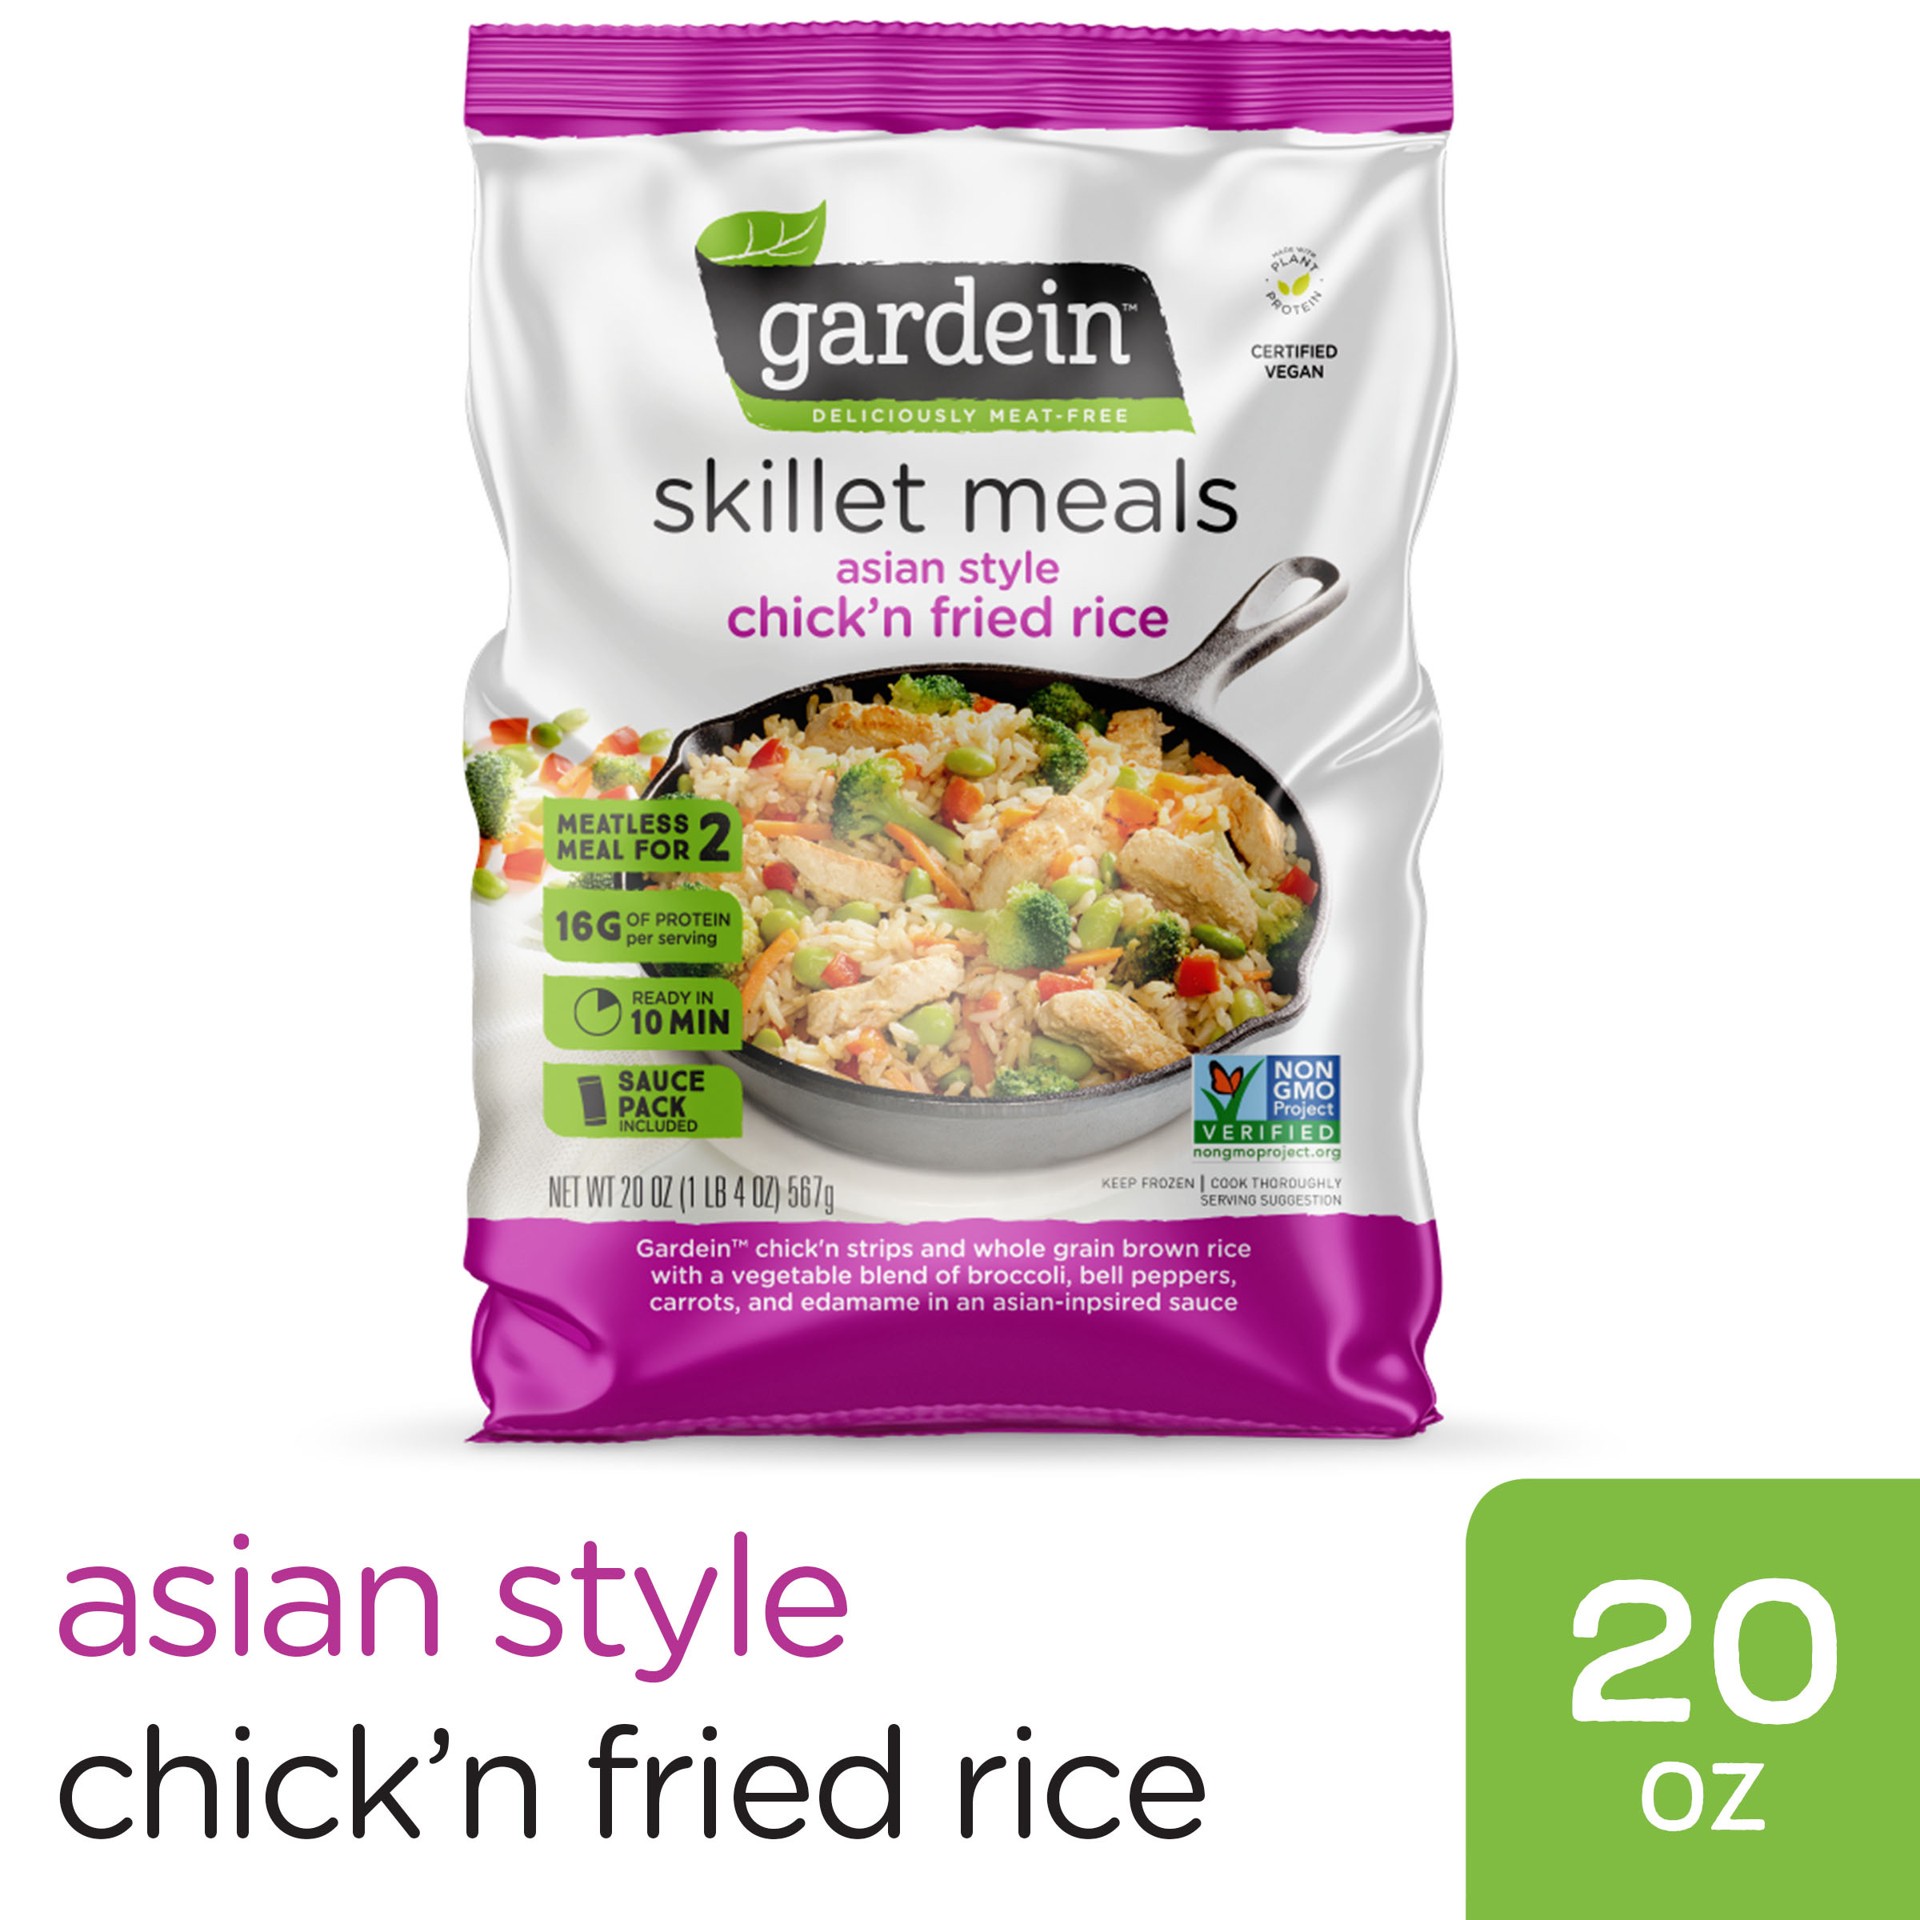 slide 1 of 13, Gardein Asian Style Plant Based Chick'n Fried Rice Skillet Meals 20 oz, 20 oz